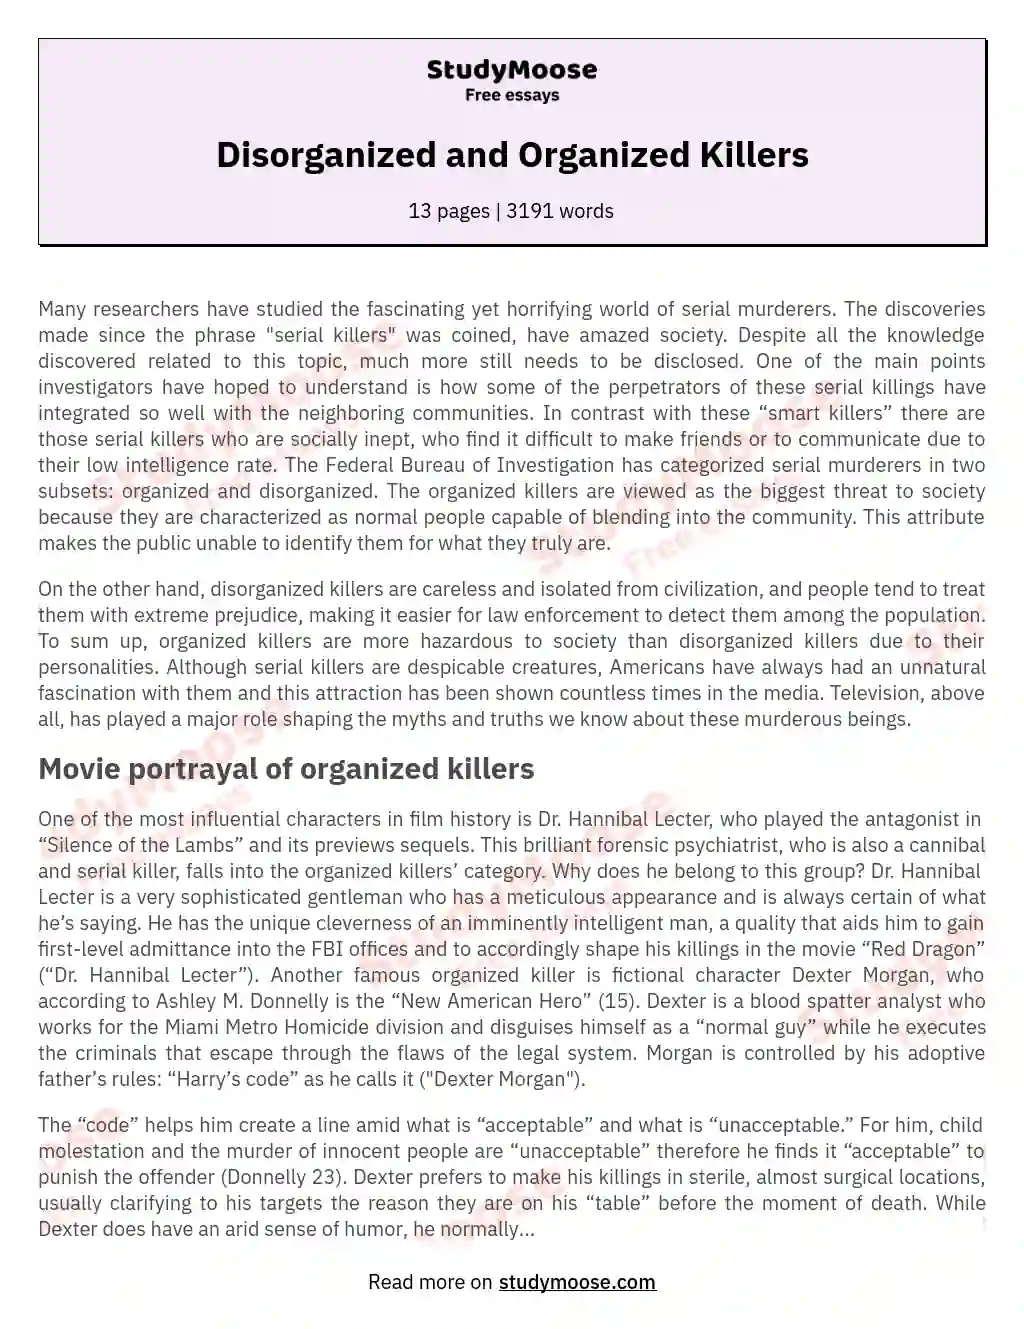 Disorganized and Organized Killers essay